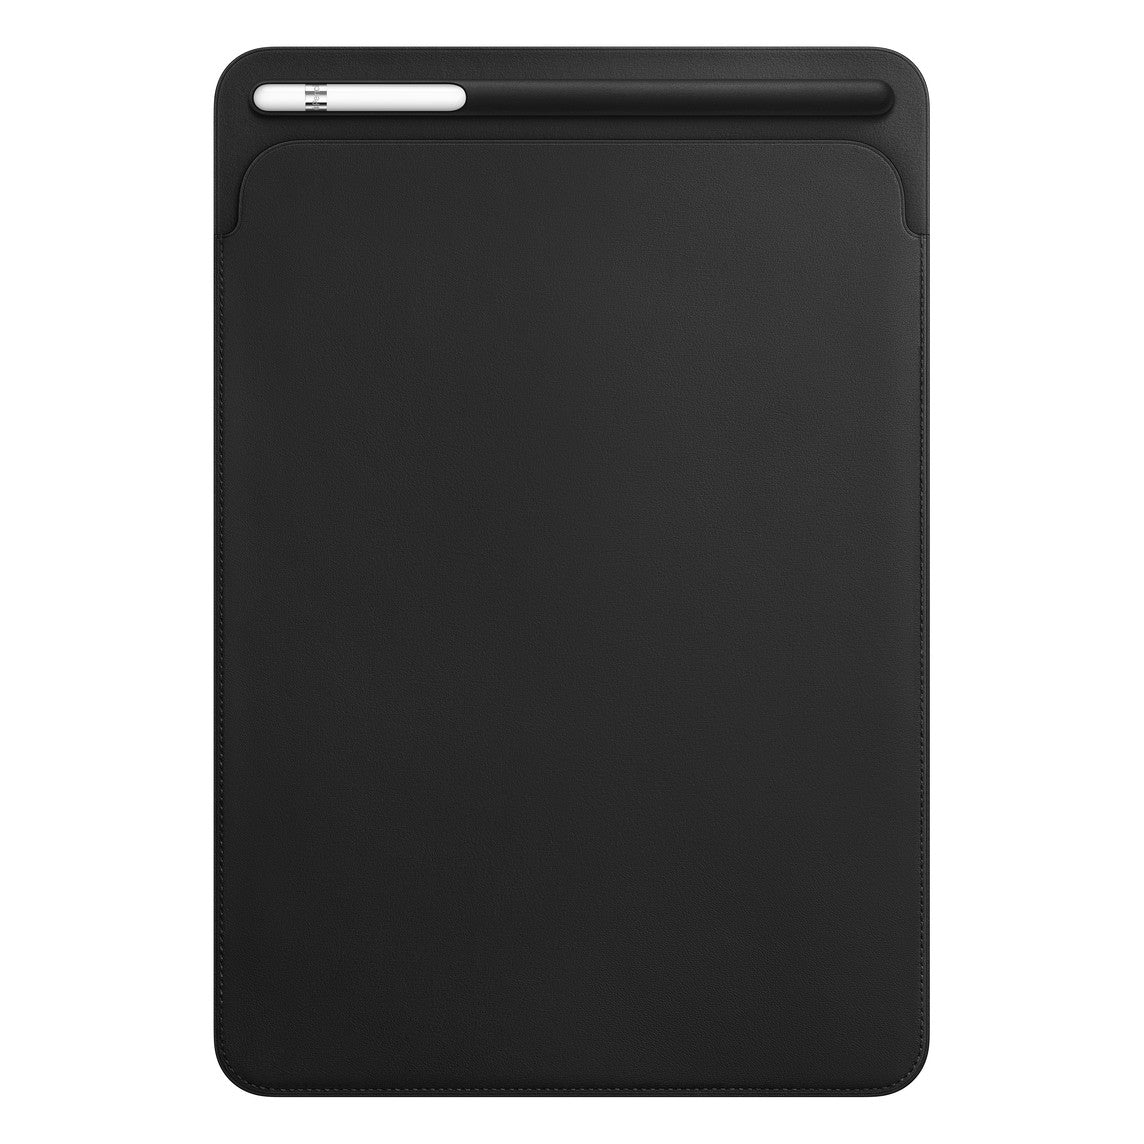 Leather Sleeve for iPad - Black